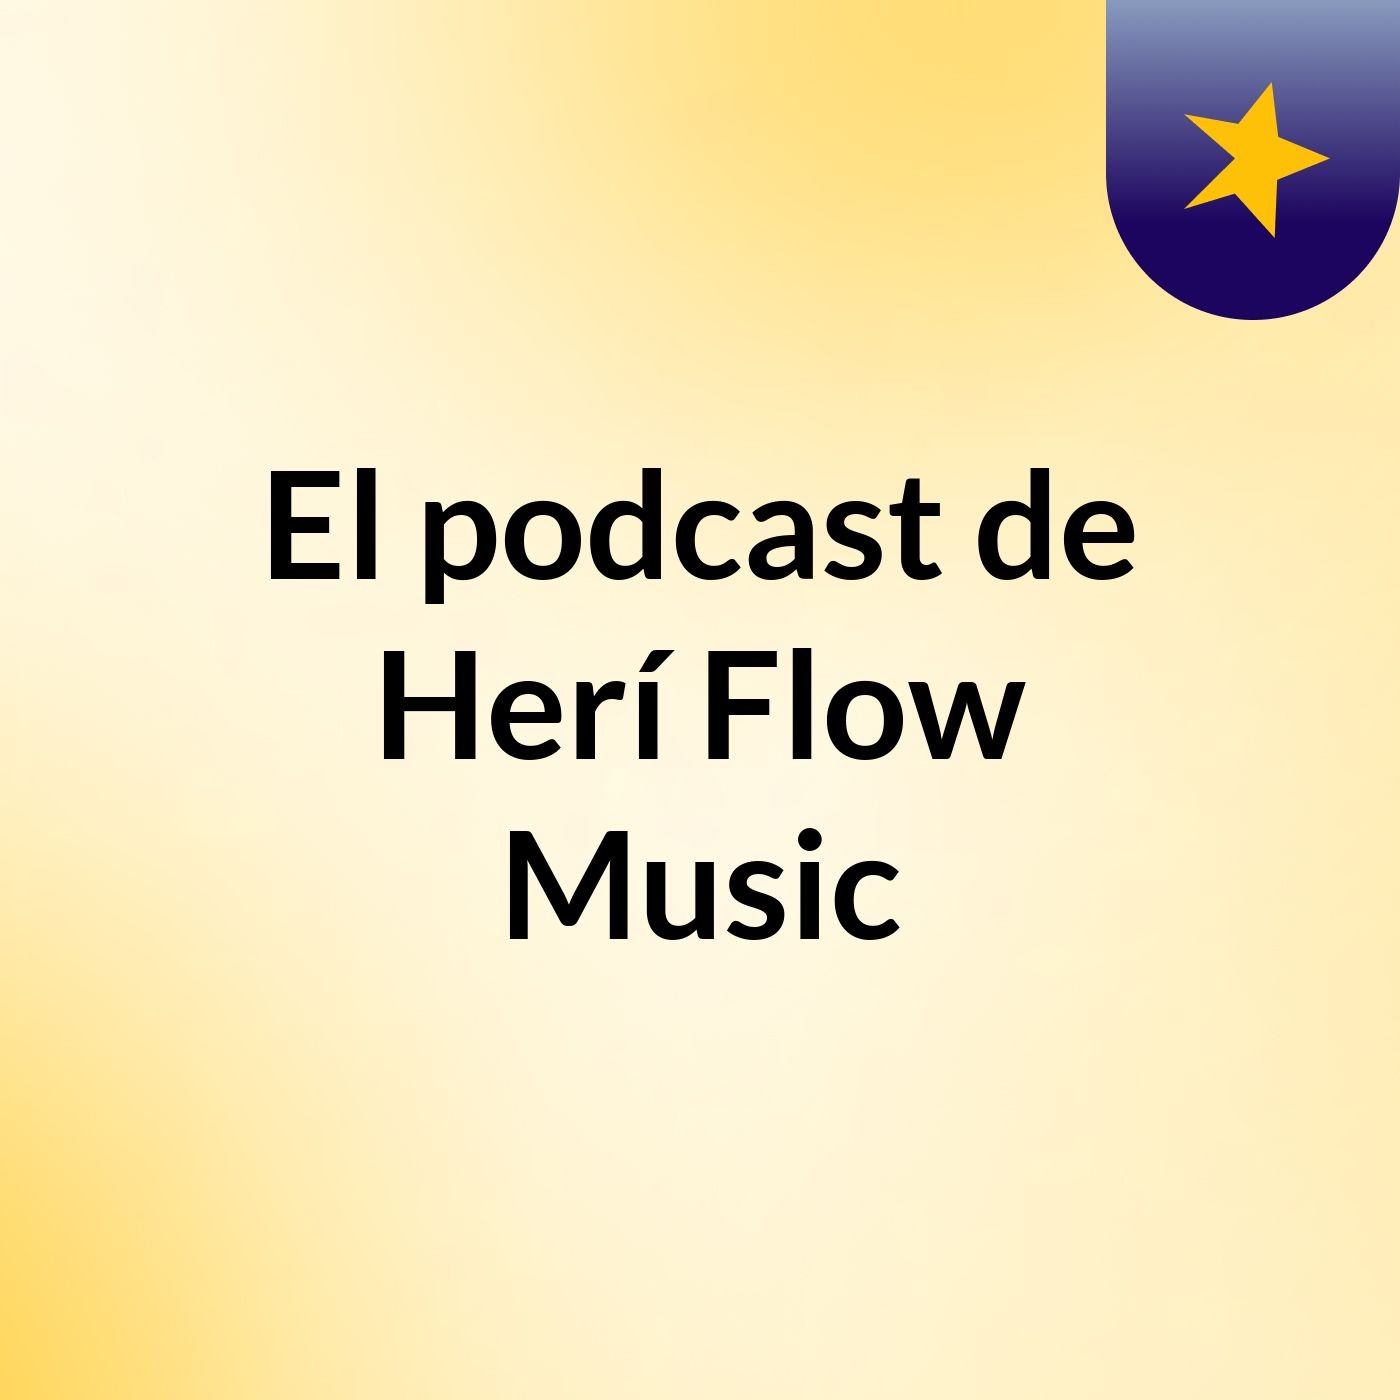 El podcast de Herí Flow Music